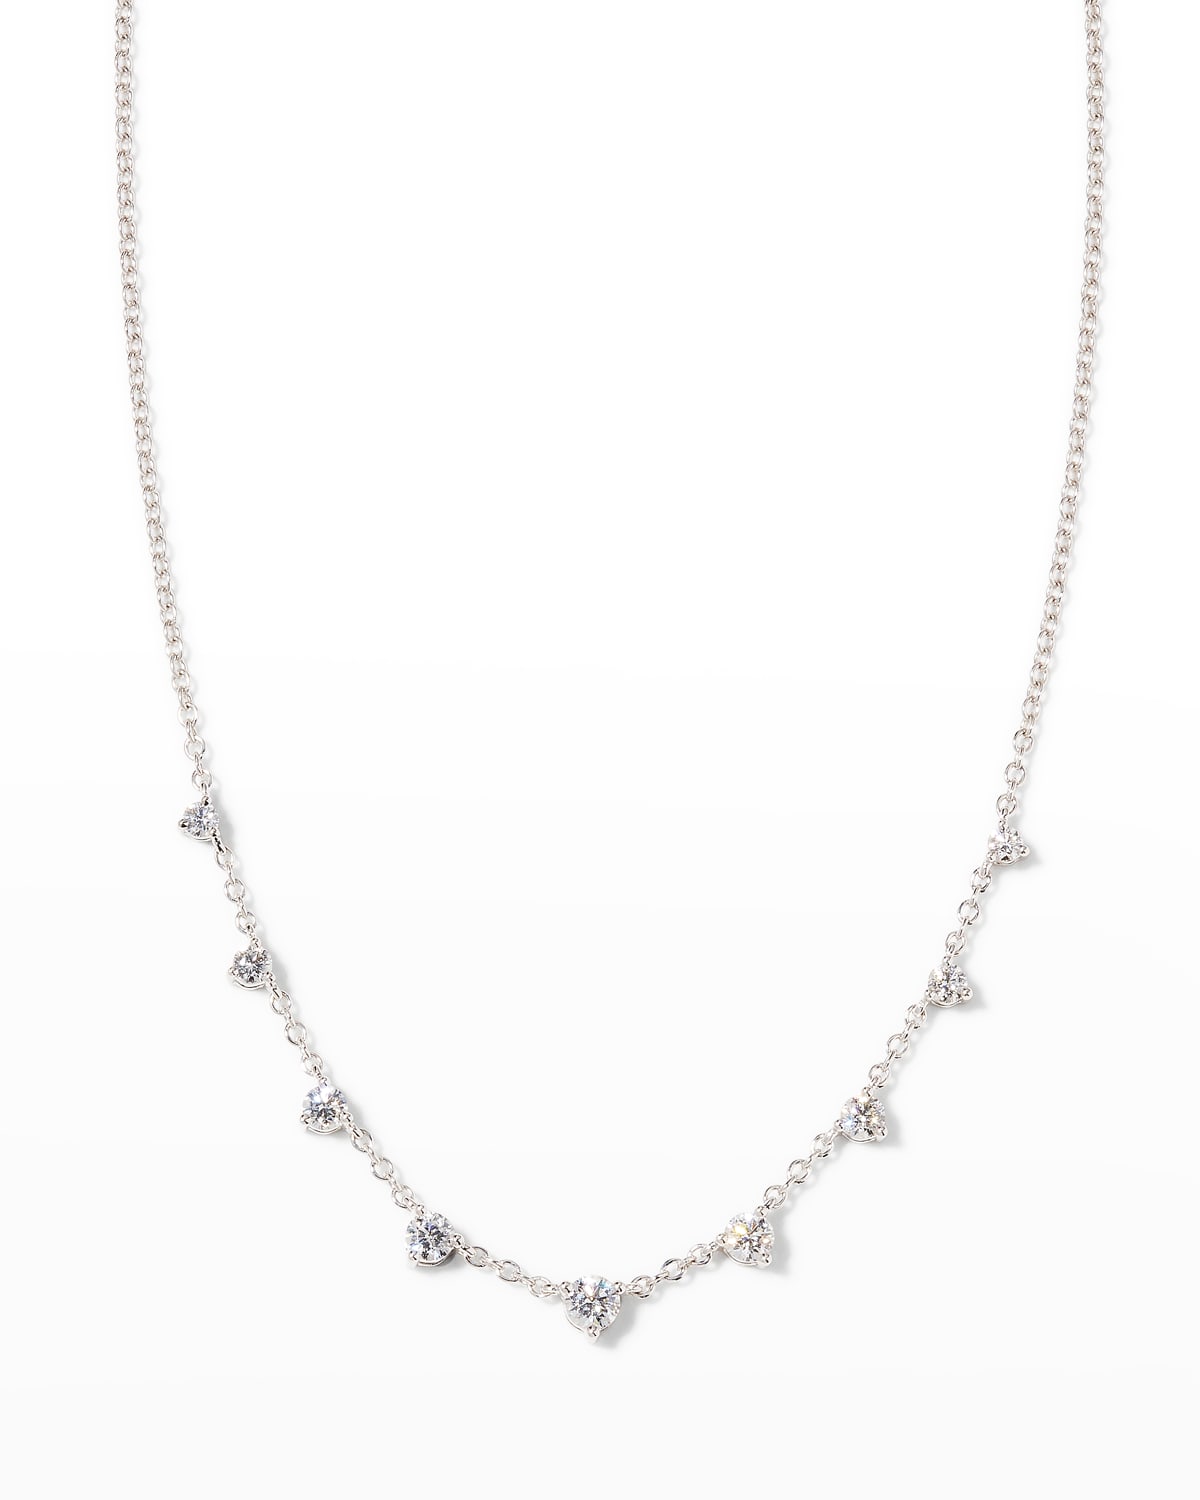 White Gold Round 9-Diamond Necklace, 18"L